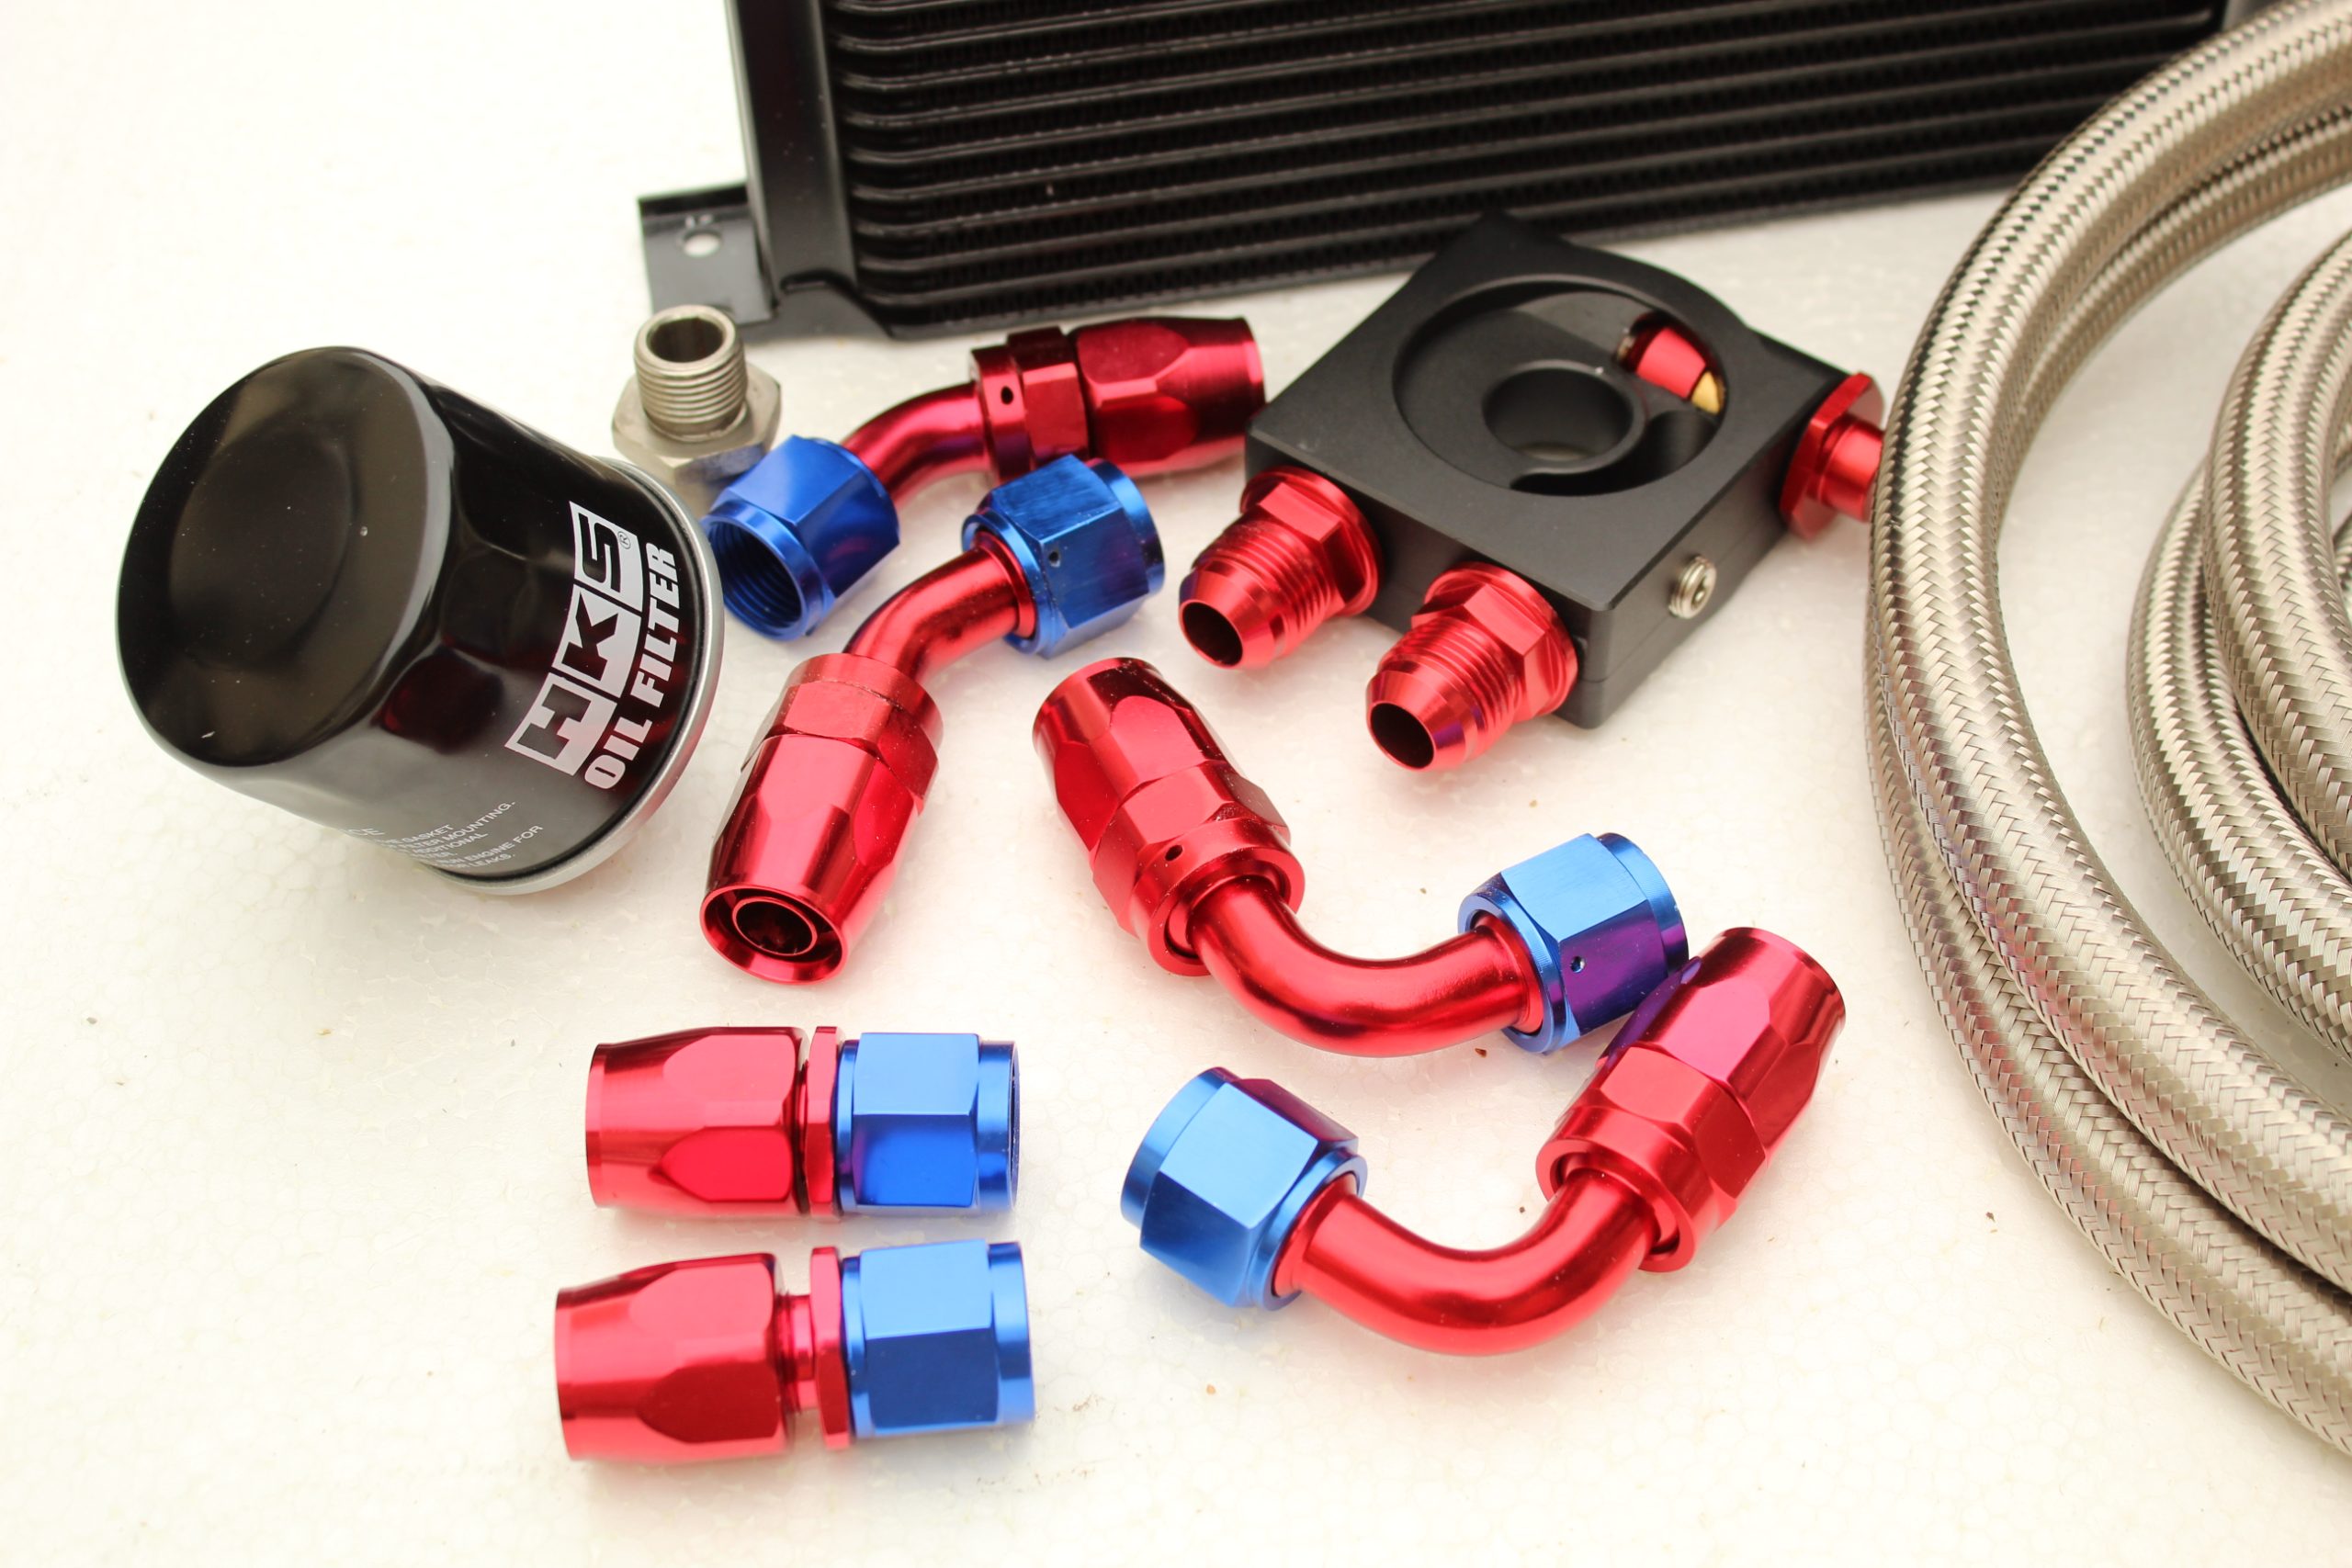 19 Row Thermostatic Oil Cooler Kit + HKS Filter for Subaru Impreza WRX/STi All EJ20/25 Engines (Copy)